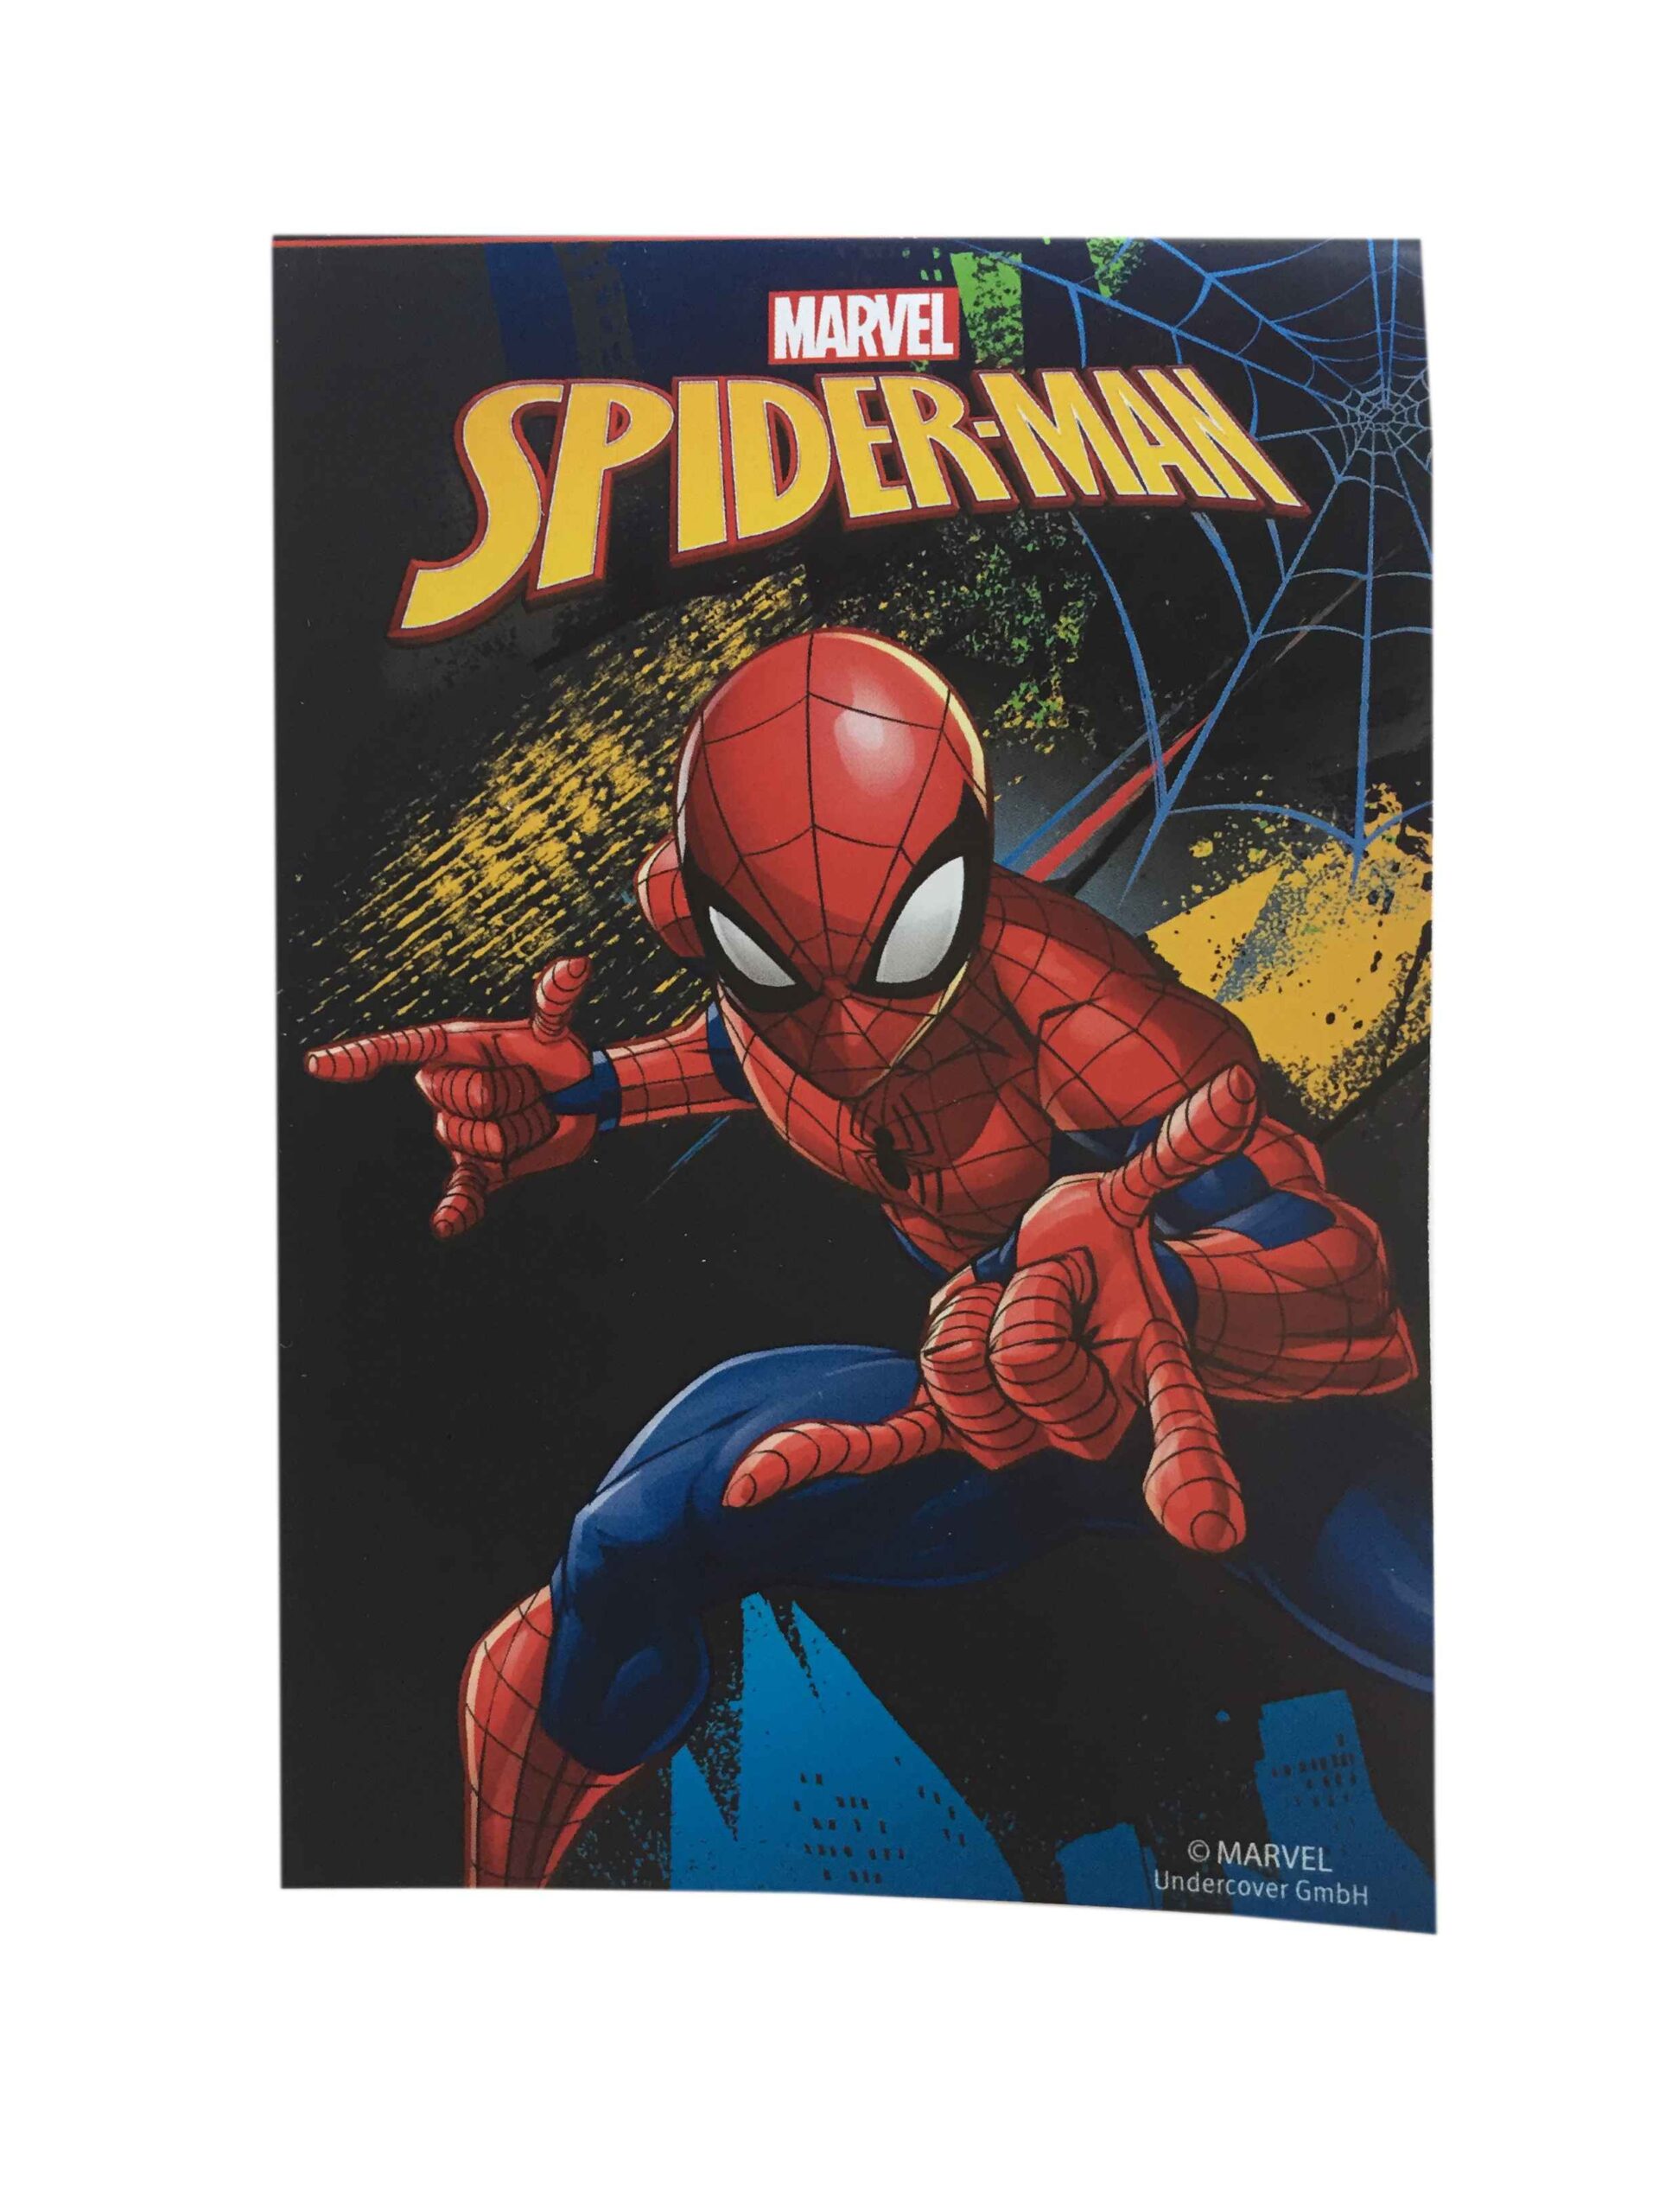 Gim Σετ Δώρου Μολυβοθήκη Spiderman 337-04884 - Gim